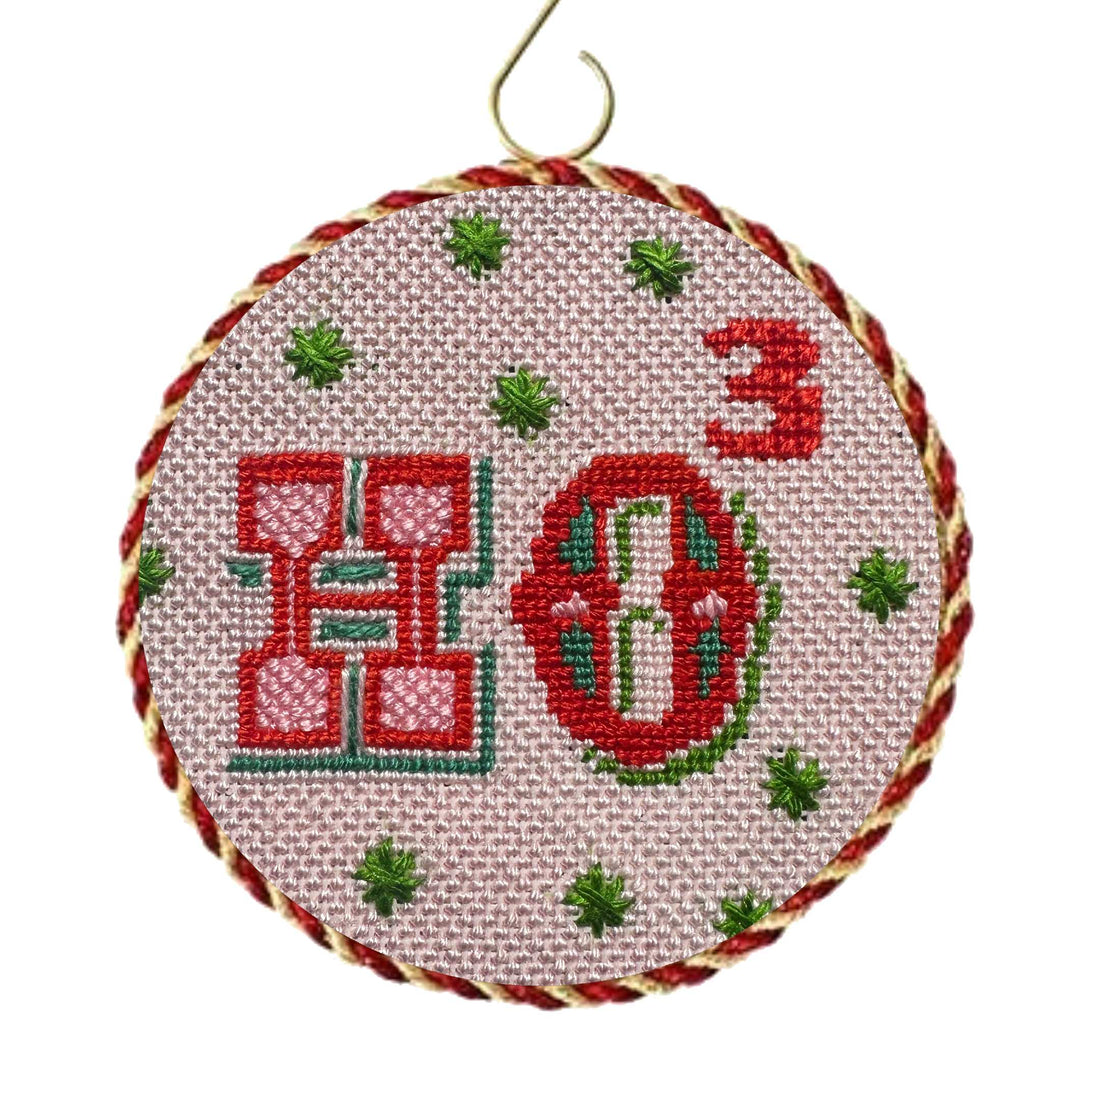 Ho Cubed needlepoint ornament kit